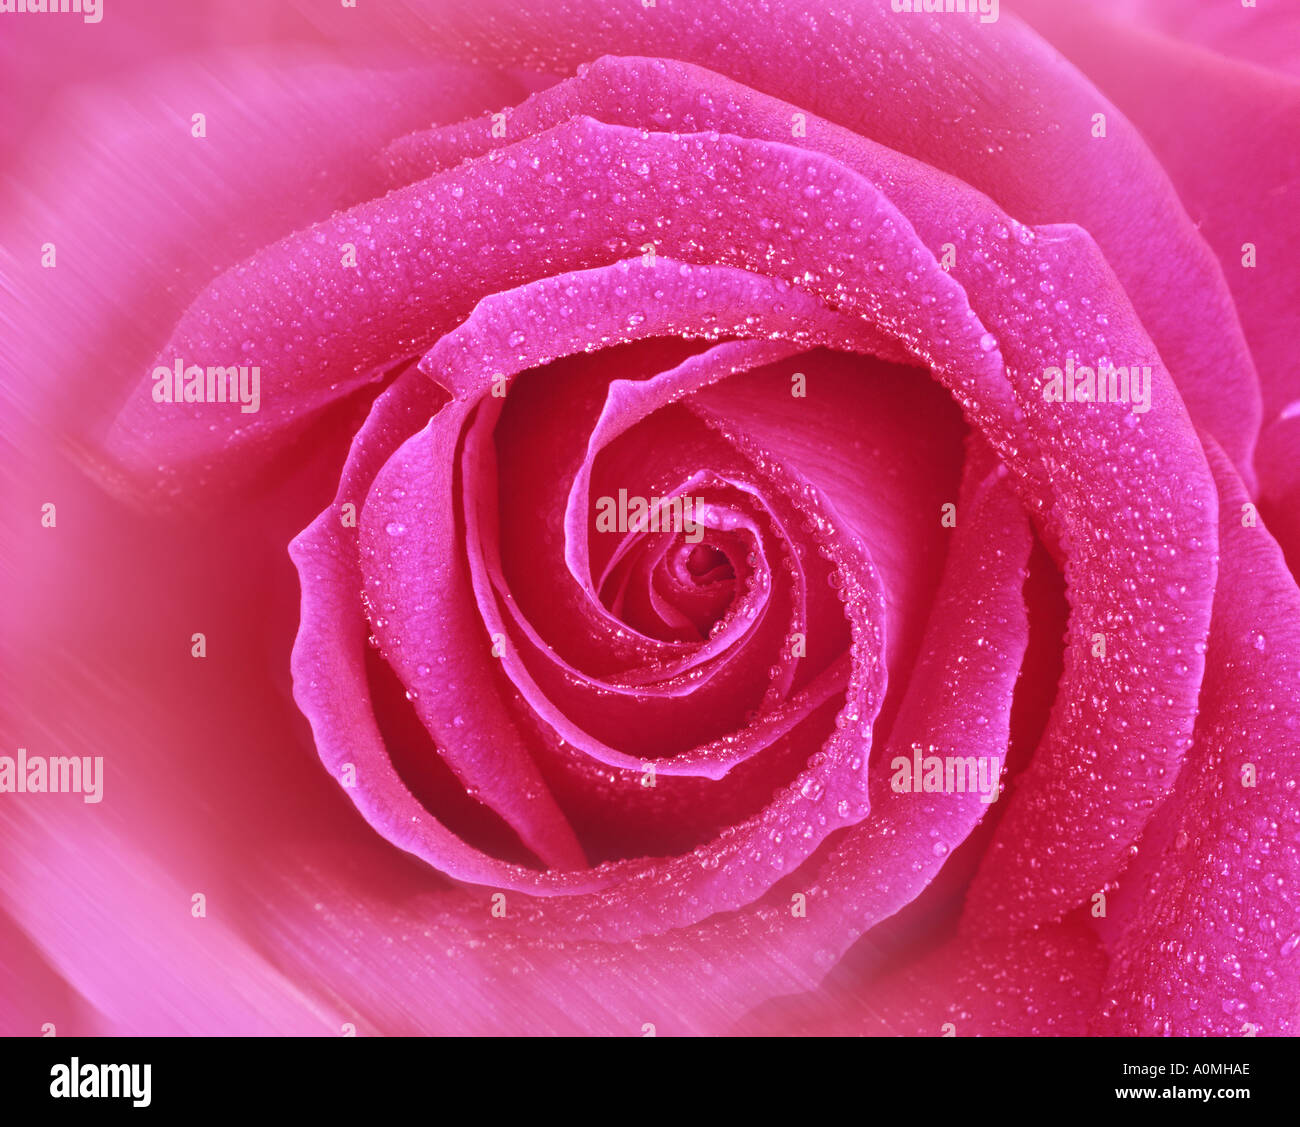 FLORA: English Red Rose (lat: rosa handel) Stock Photo